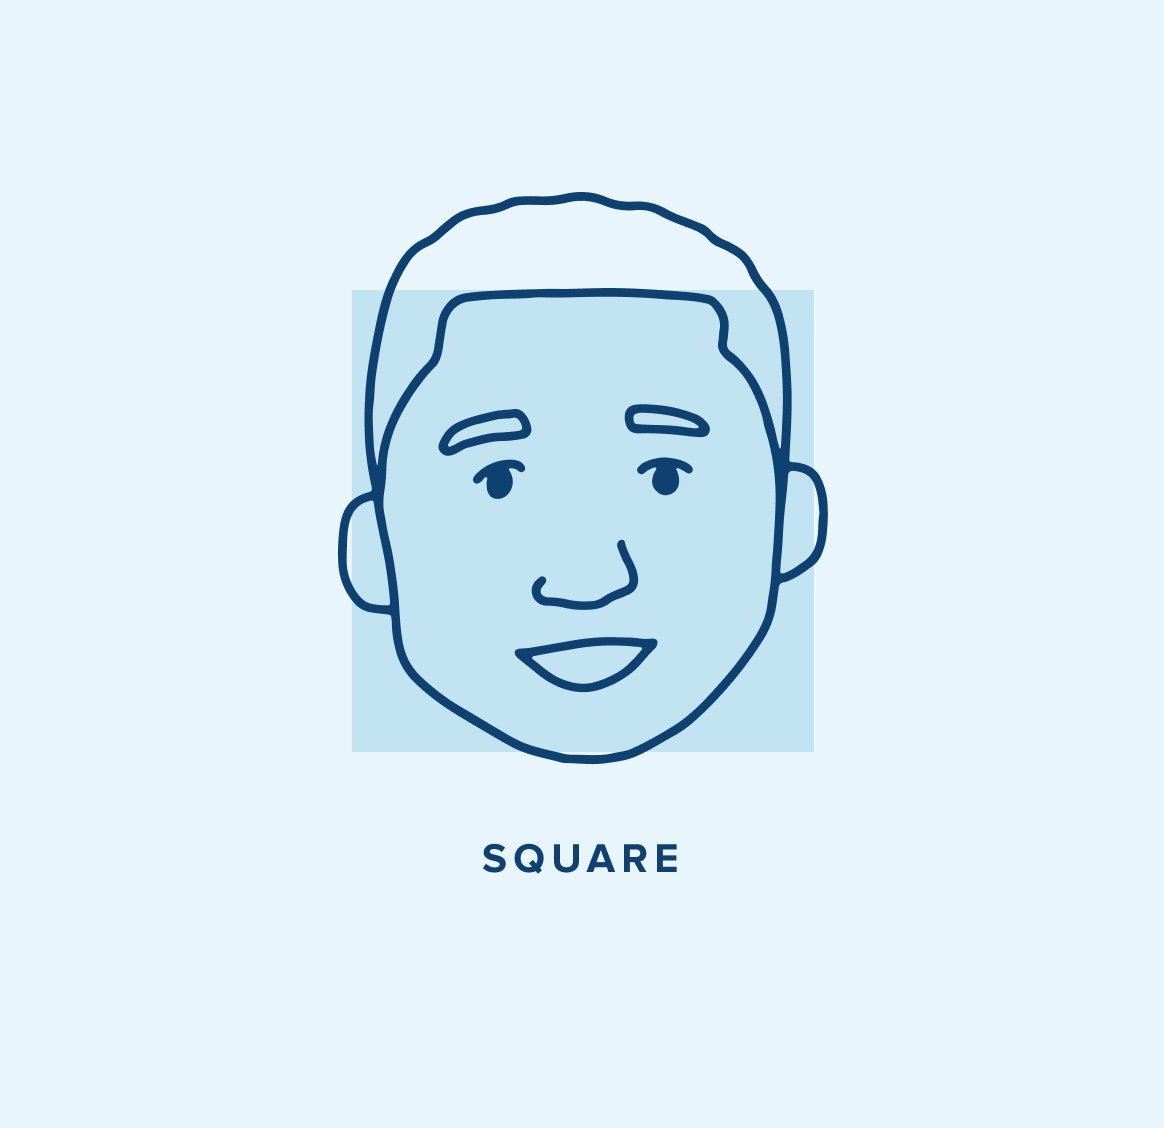 Illustration of a square face shape